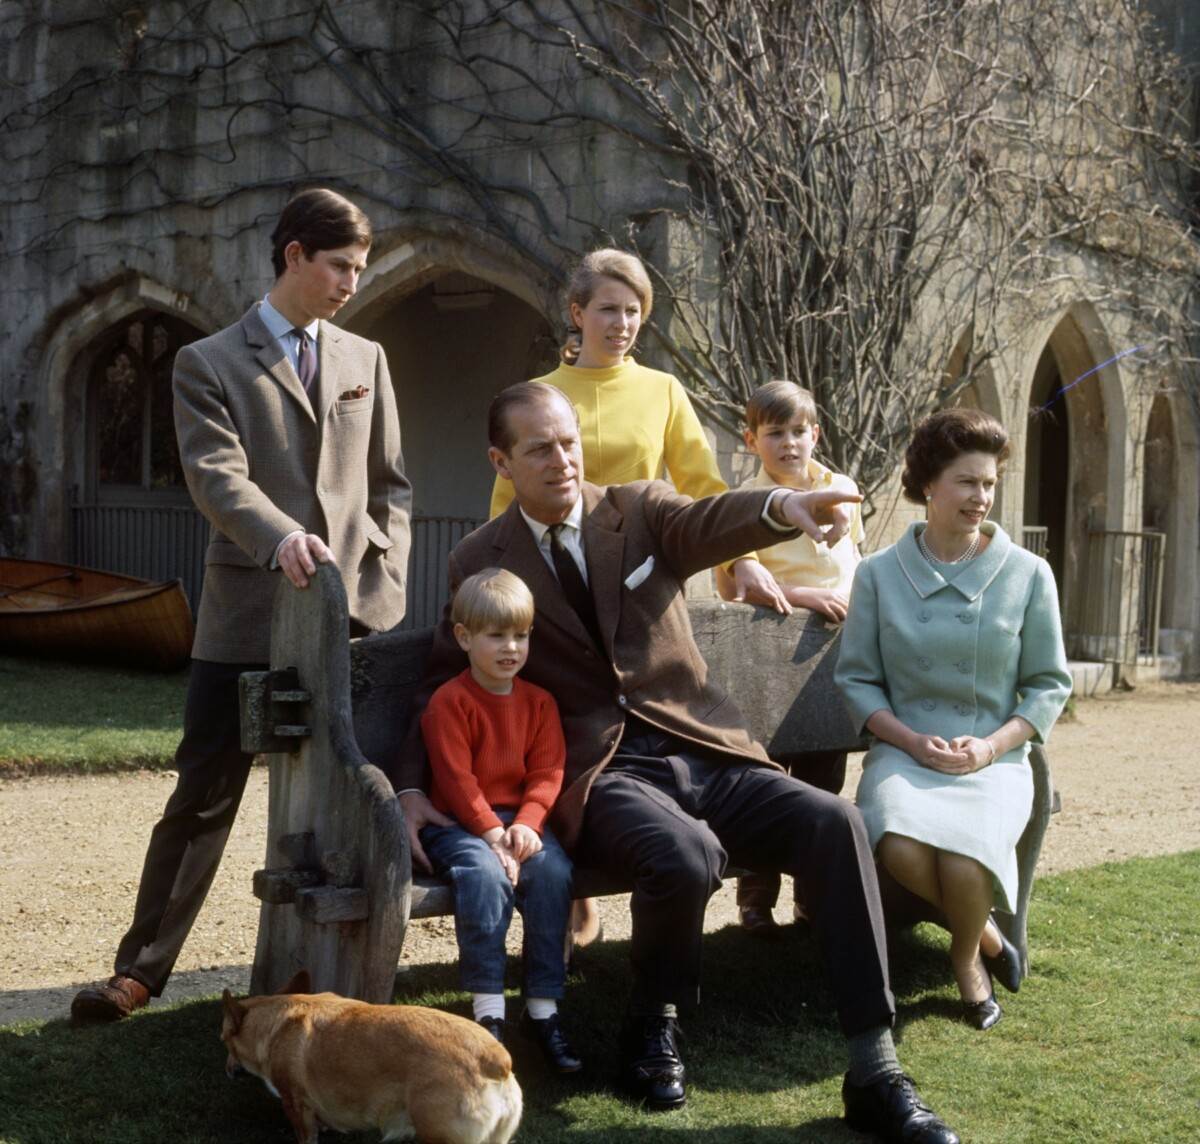 Kraljica Elizabeta princ Philip i djeca Prince Charles, Prince Andrew, princ Philip, princeza Anne, princ Edward